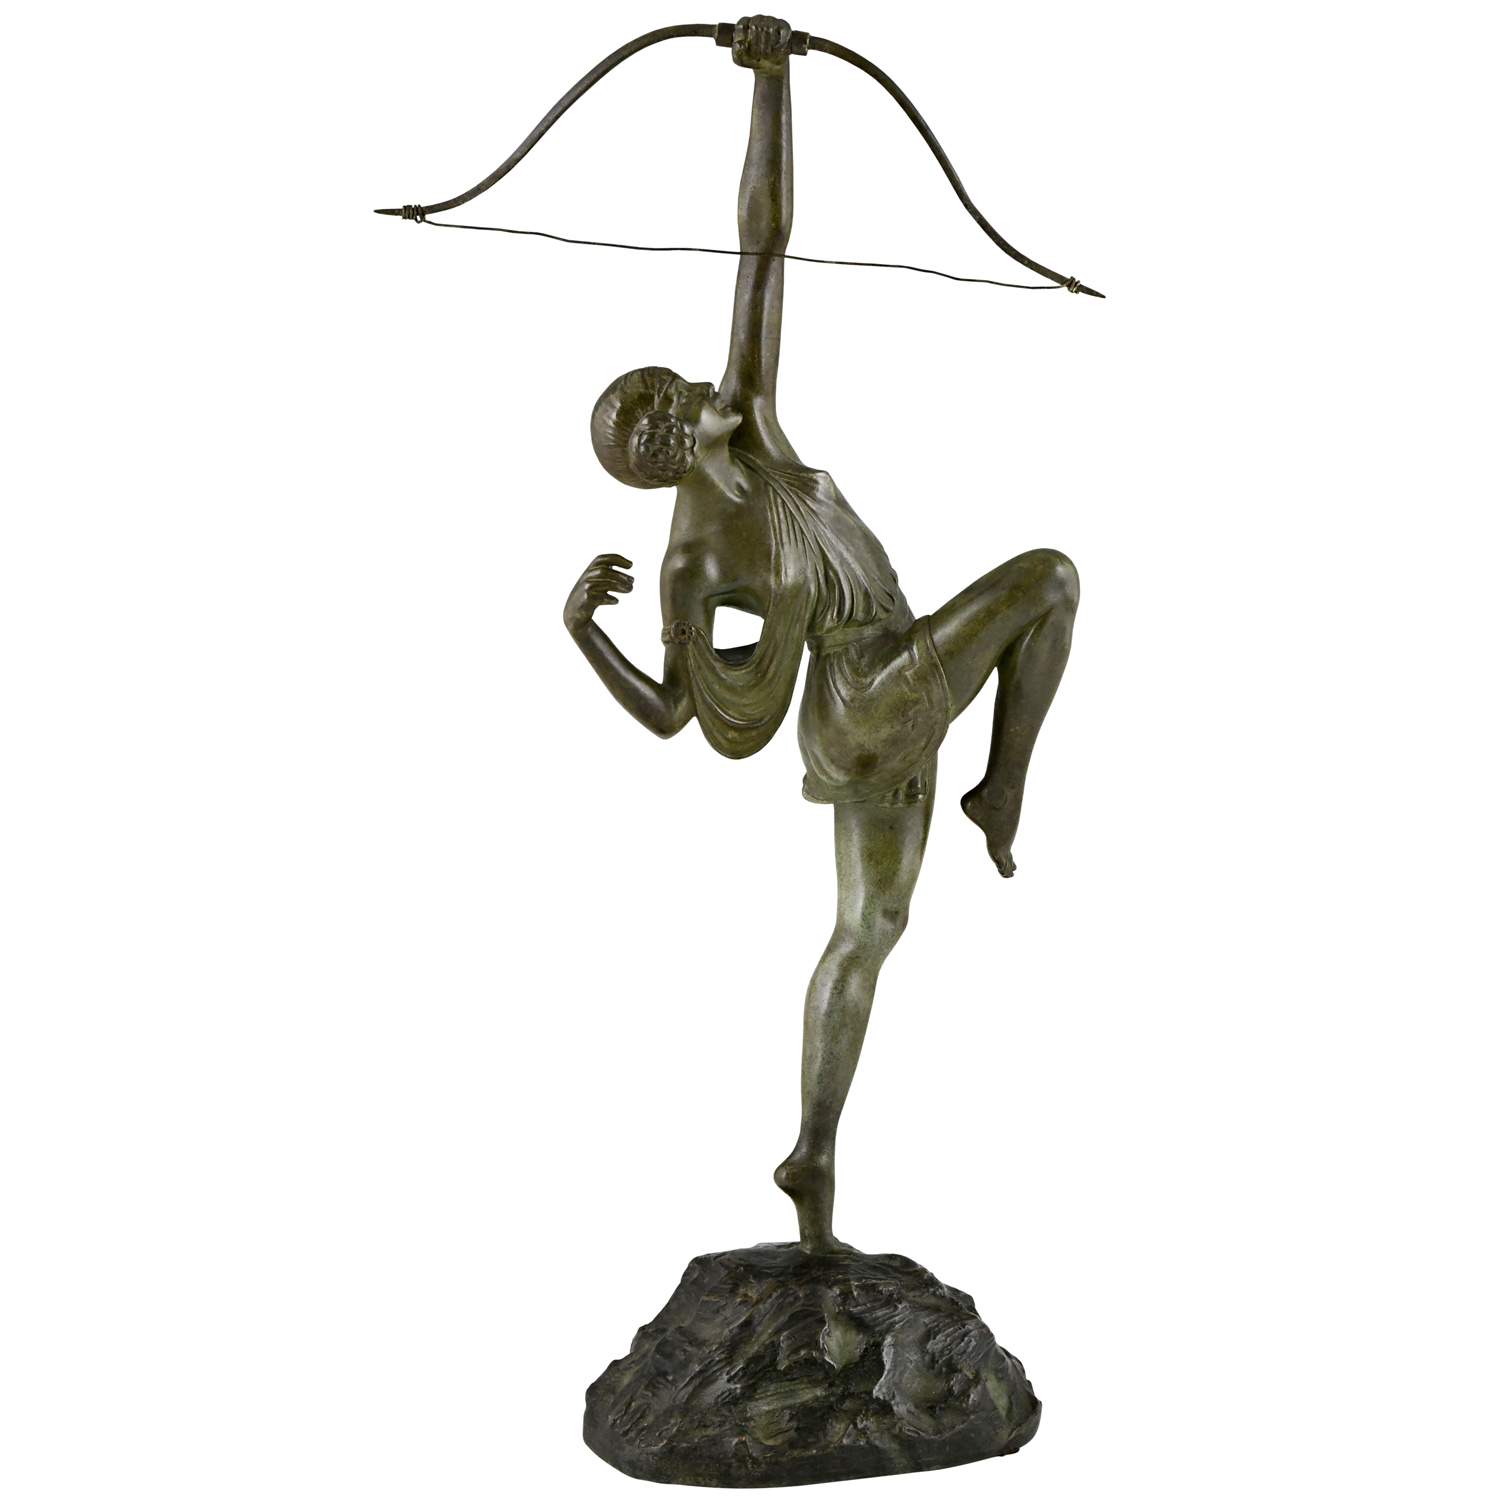 Art Deco bronze sculpture Diana Le Faguays